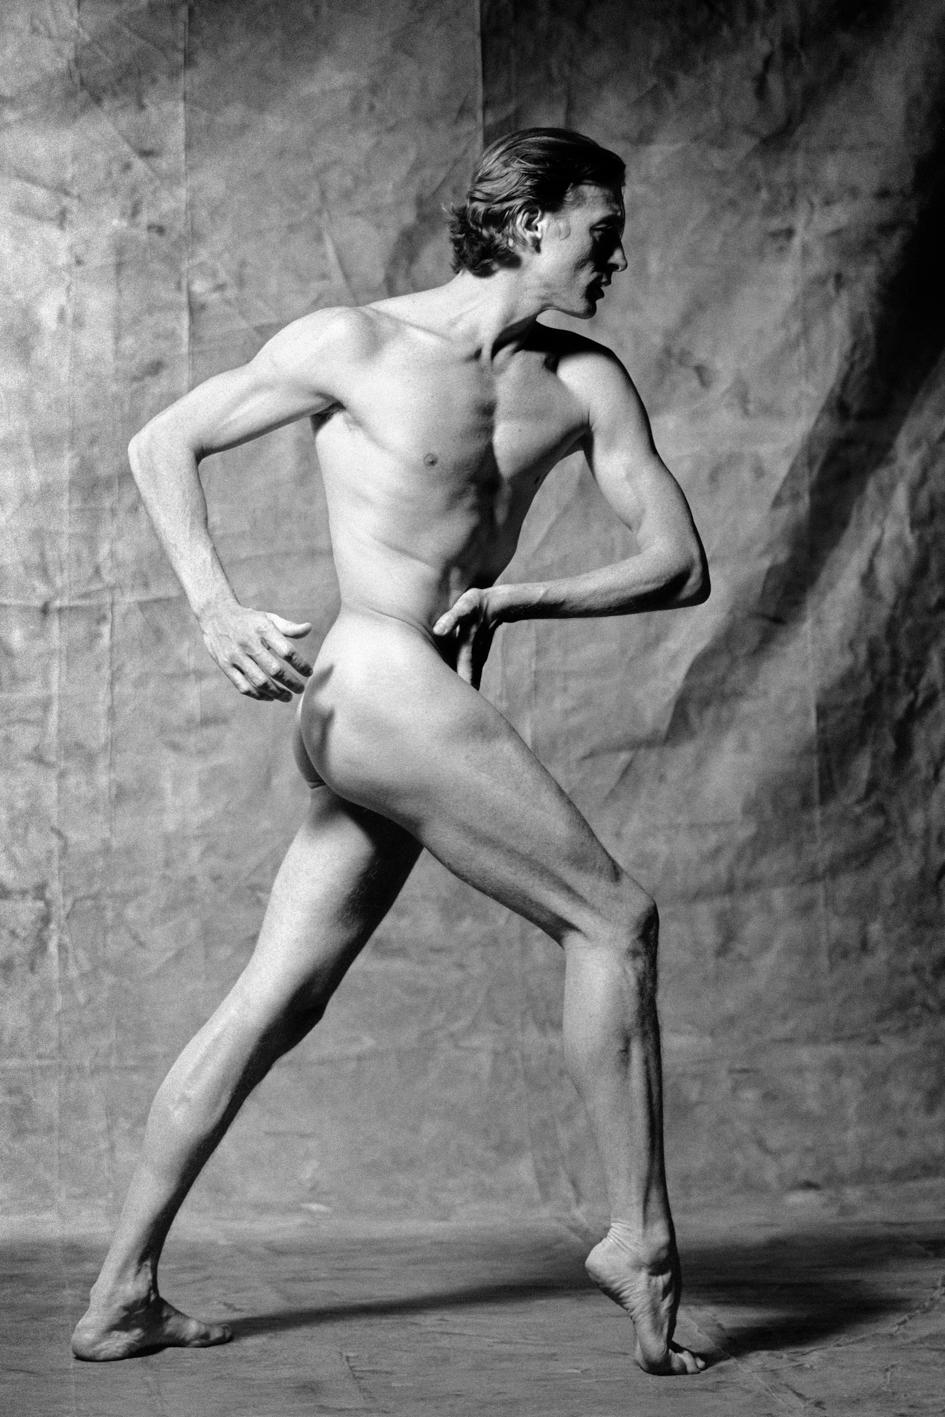 Hombre desnudo posando como una estatua griega